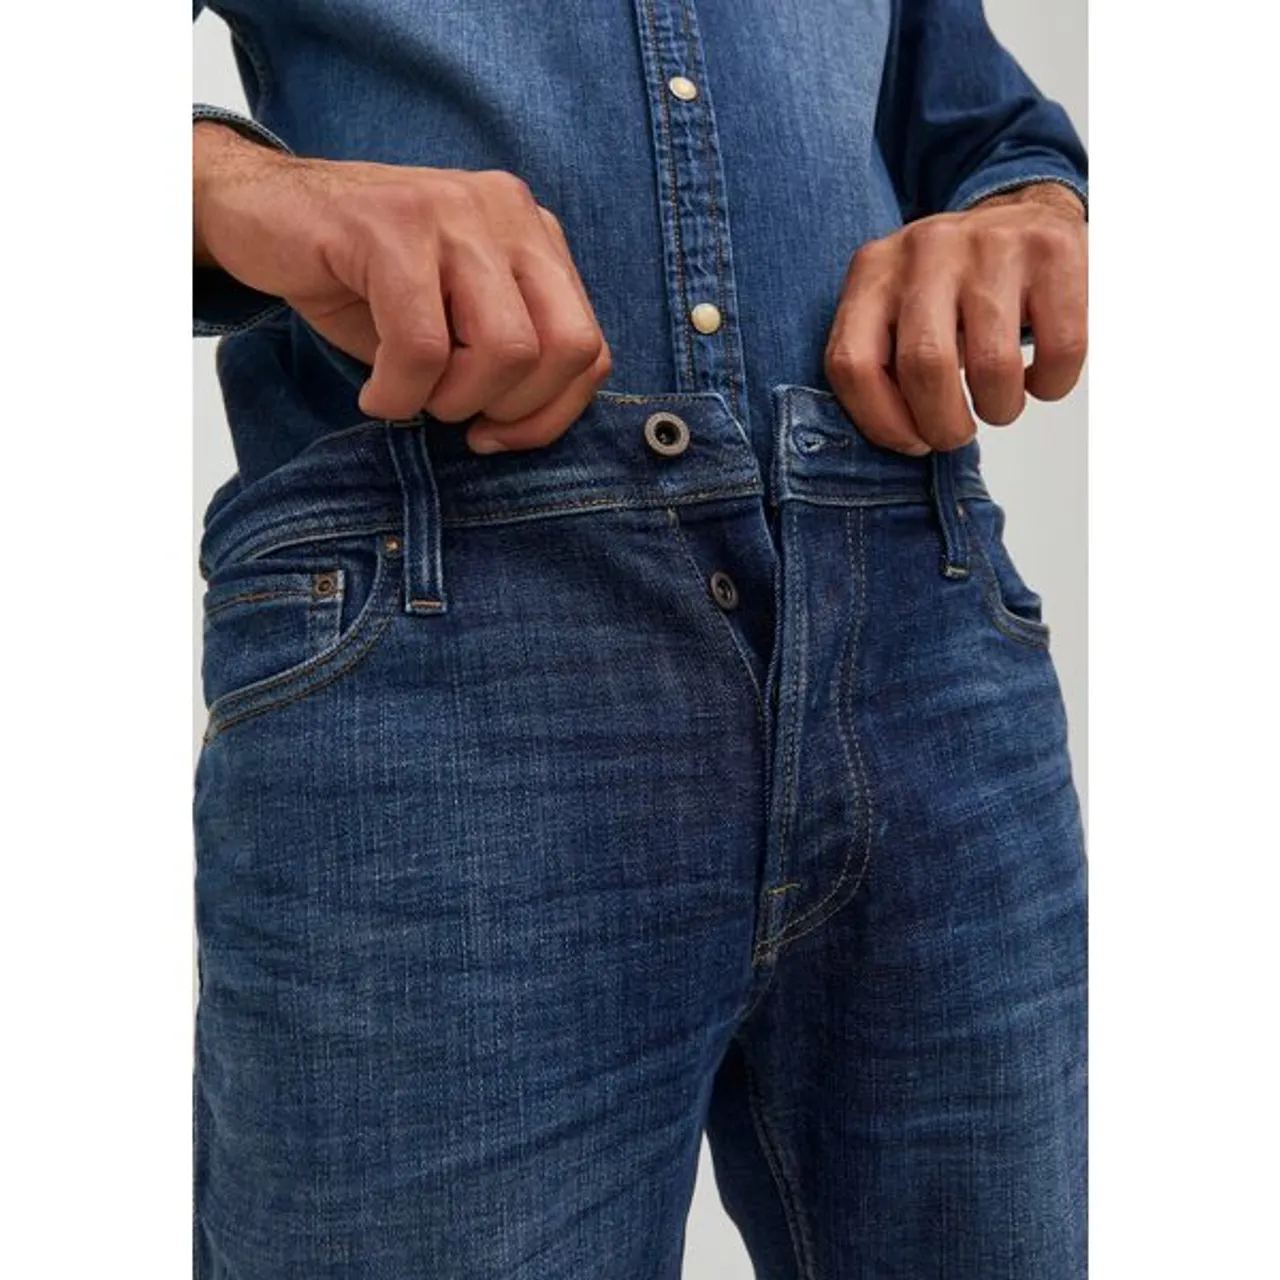 Comfort-fit-Jeans JACK & JONES "MIKE ORIGINAL" Gr. 30, Länge 30, blau (bluedenim) Herren Jeans Comfort Fit